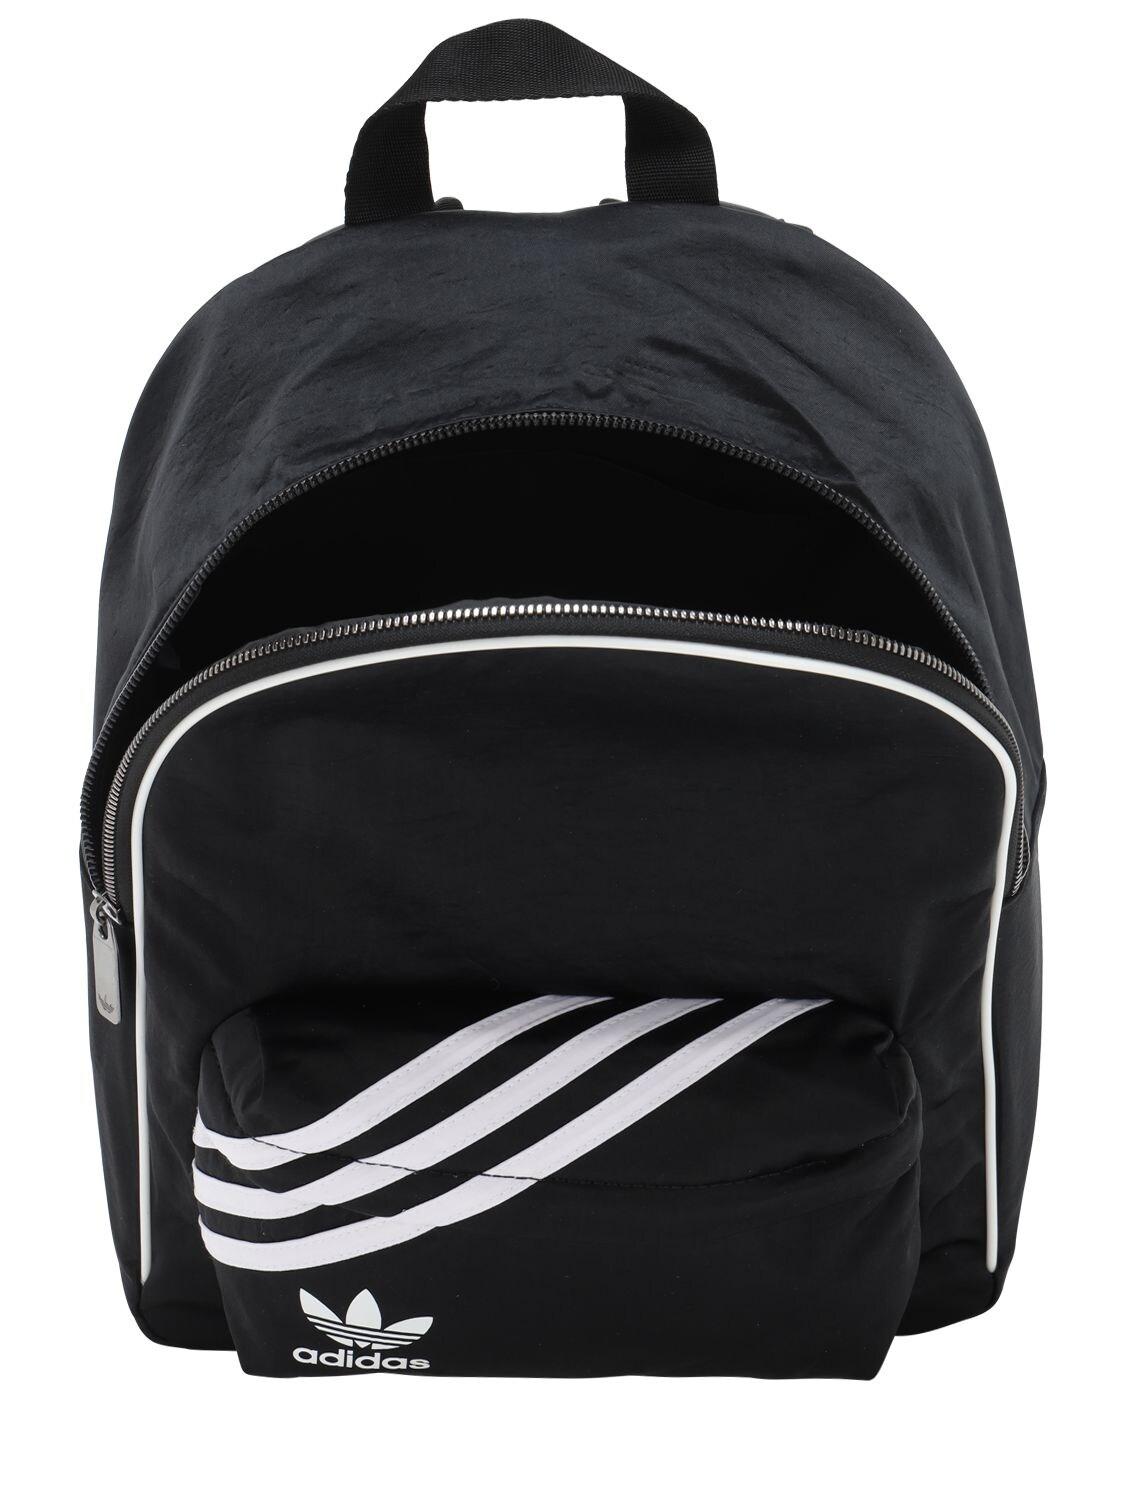 adidas Originals Nylon Backpack in Black | Lyst